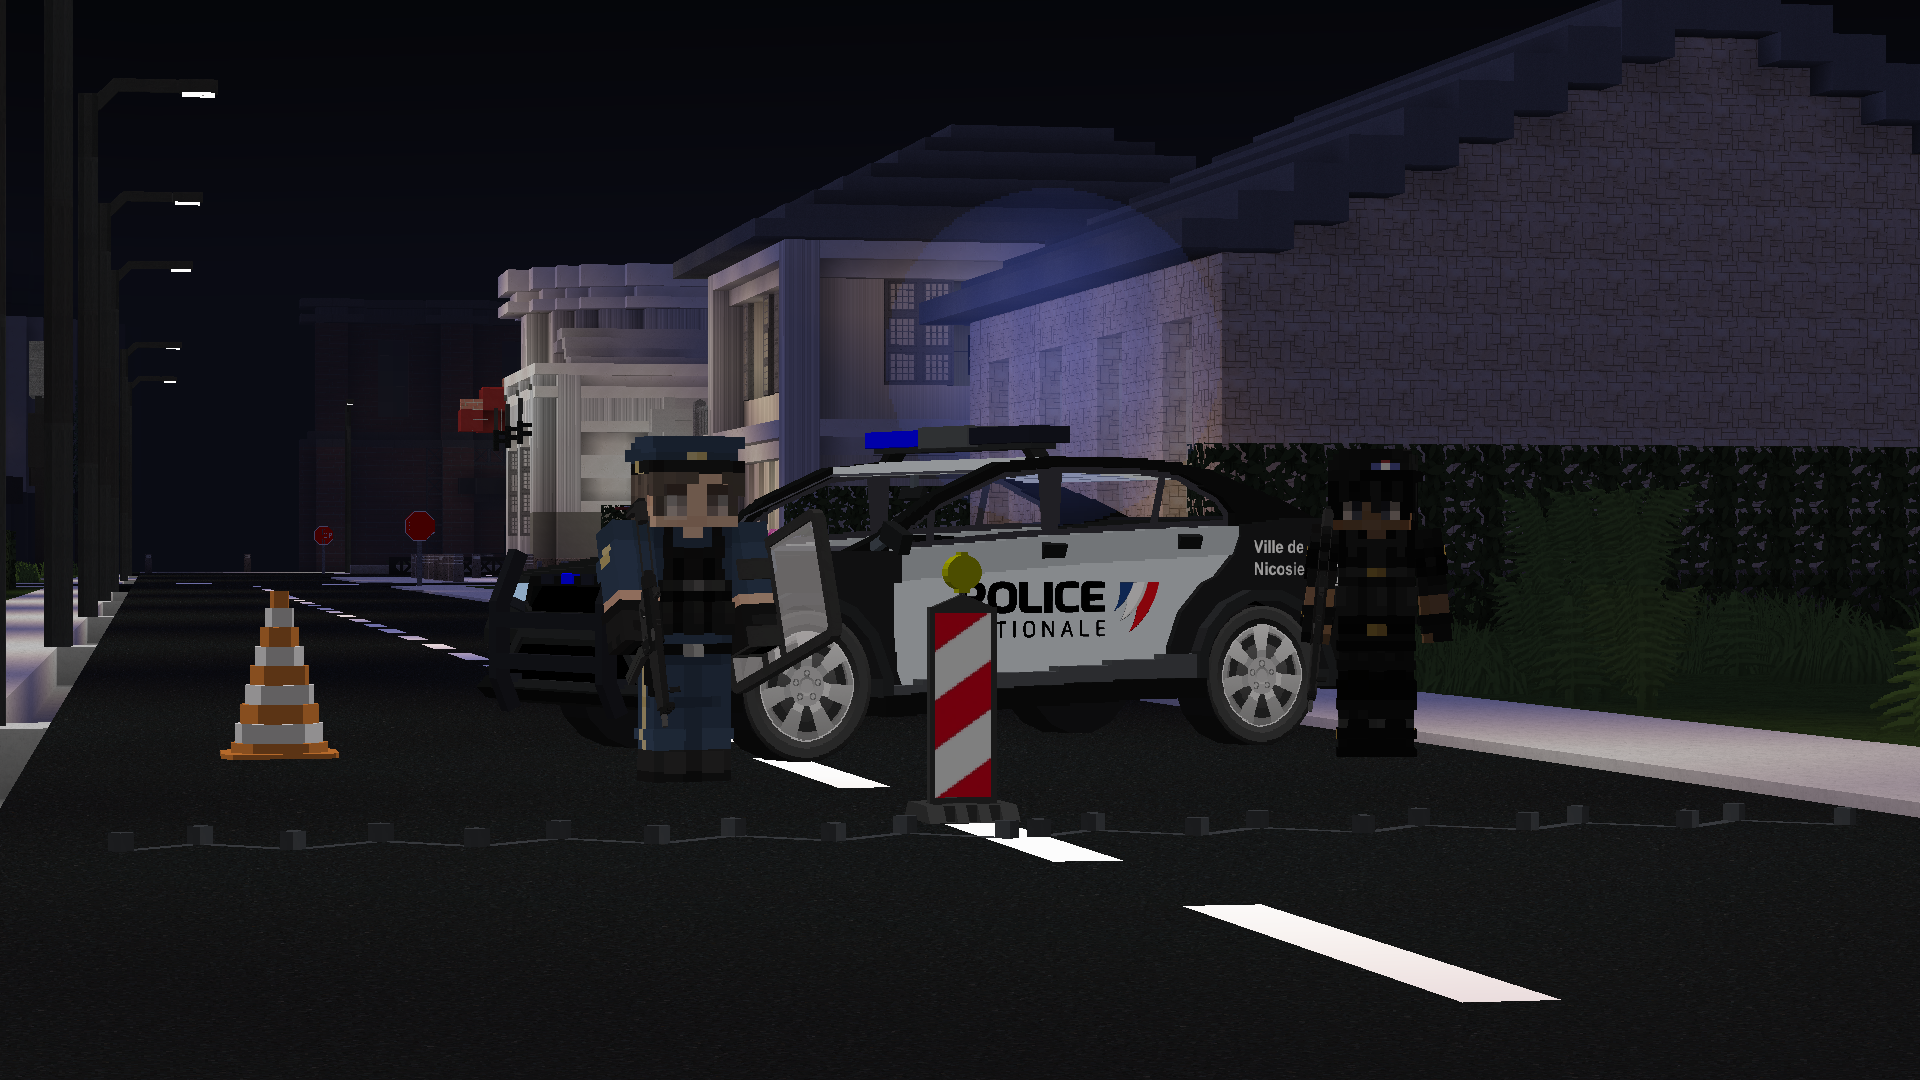 La police de Nicosie arrive !